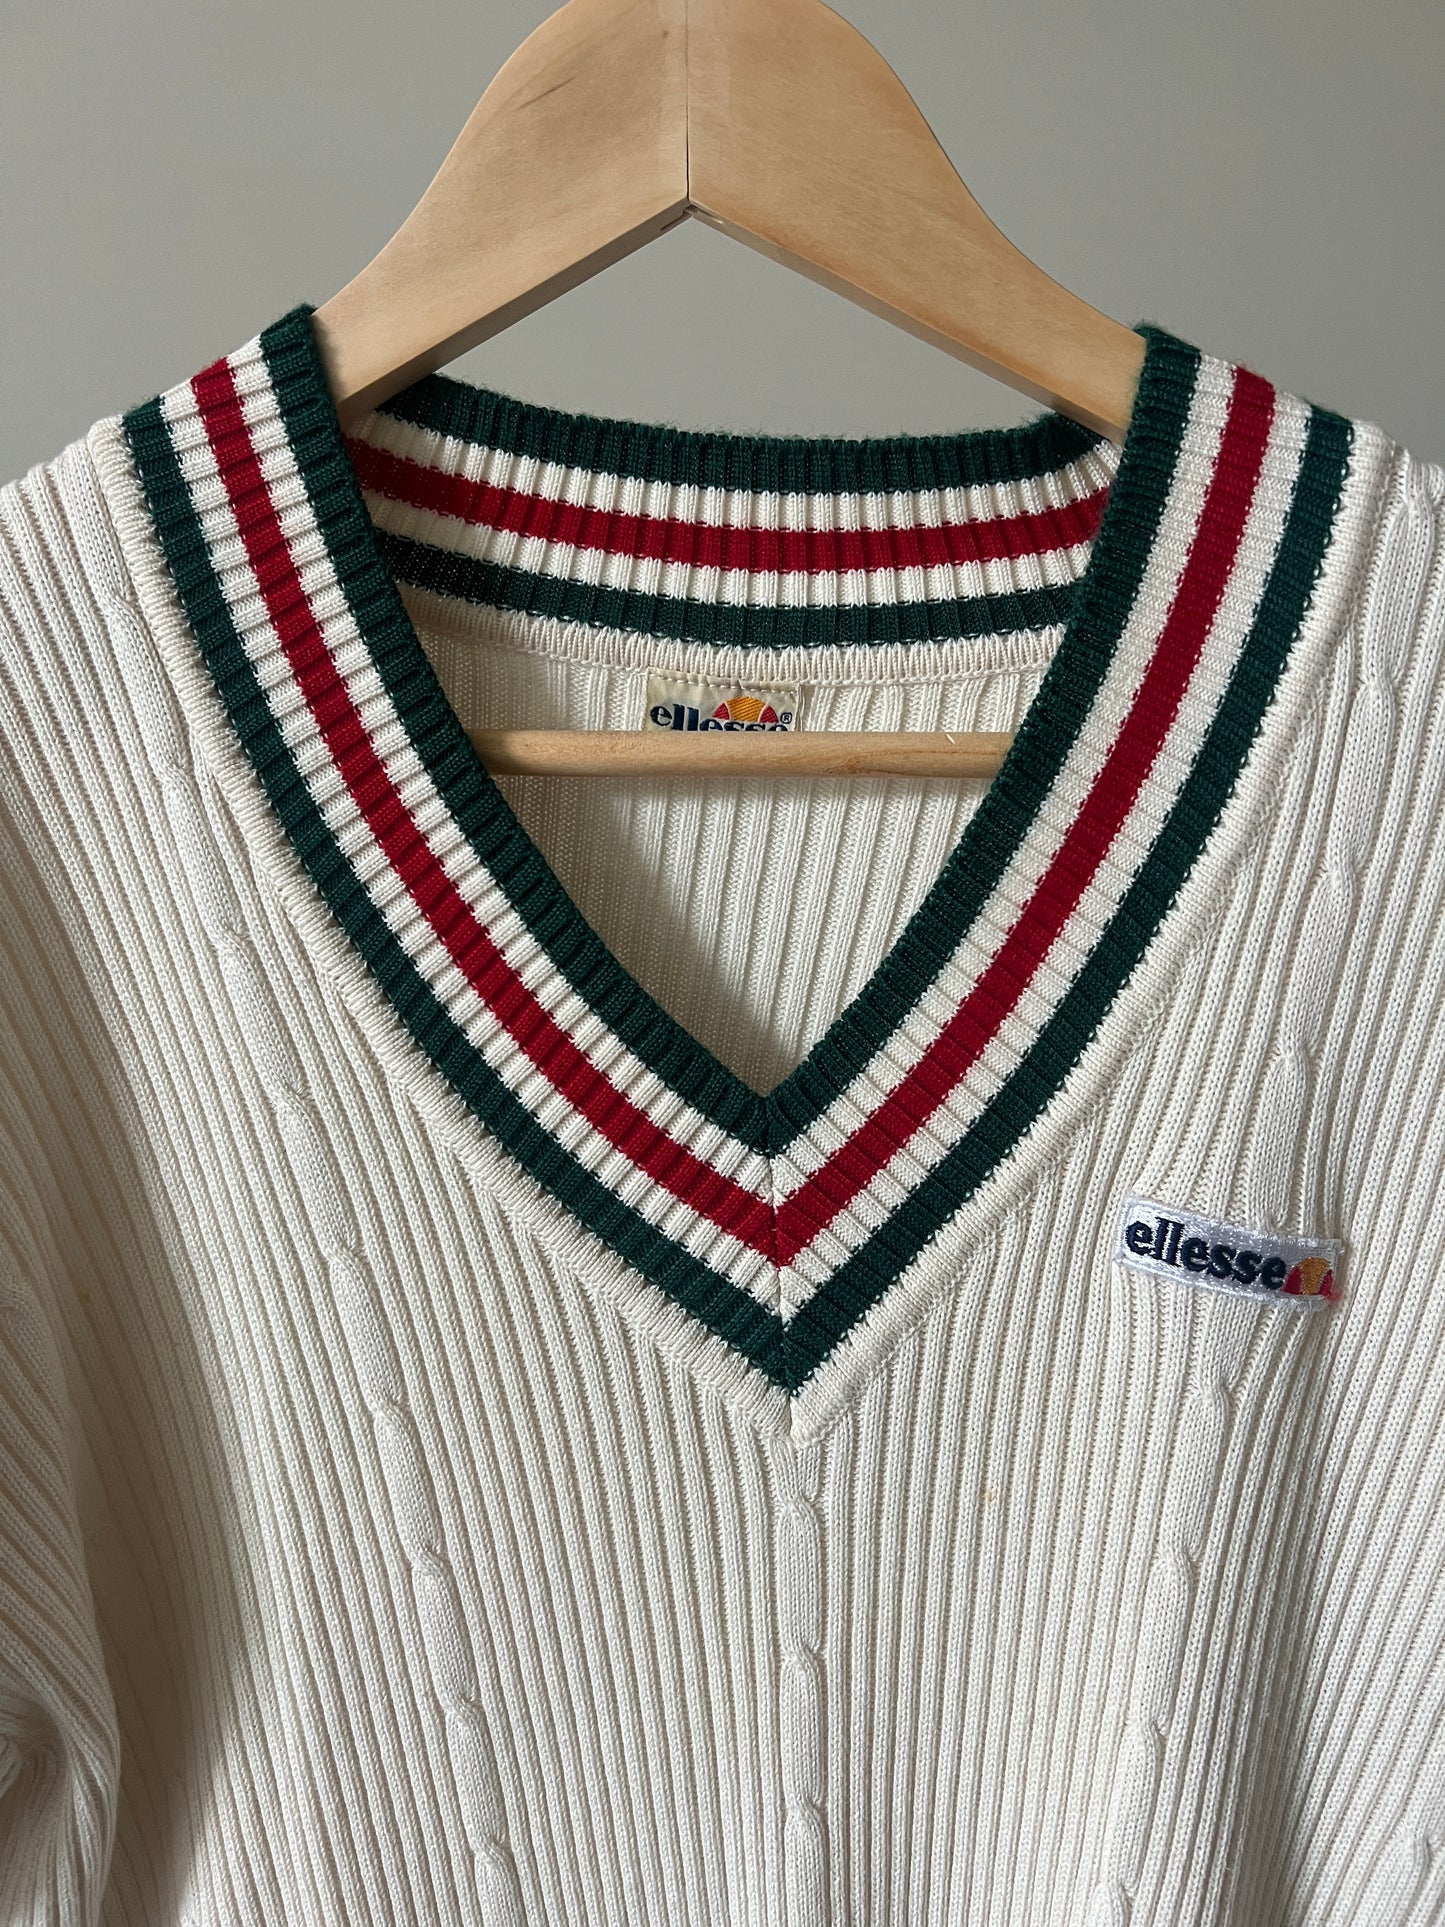 Vintage Ellesse Tennis Sweater (circa 1980s)